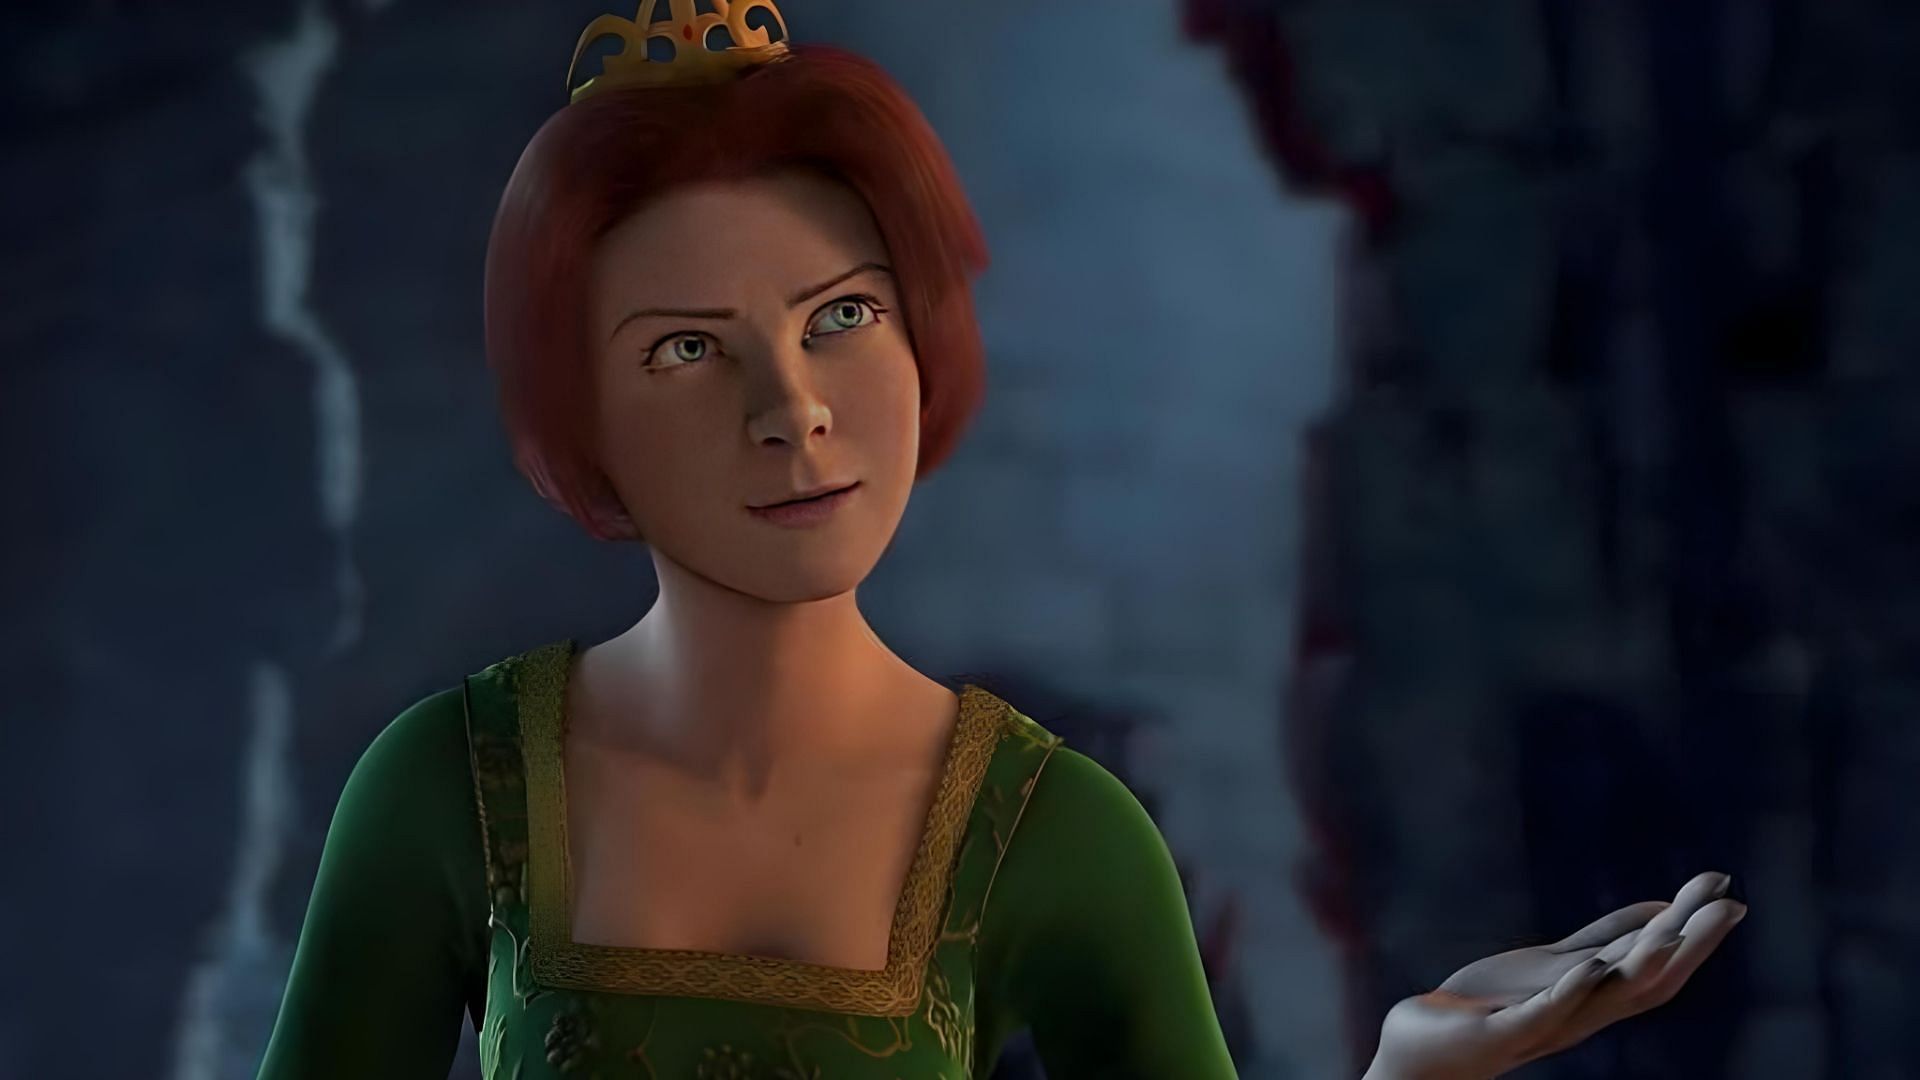 Princess Fiona is the most popular non-Disney princess (Image via DreamWorks Animation)